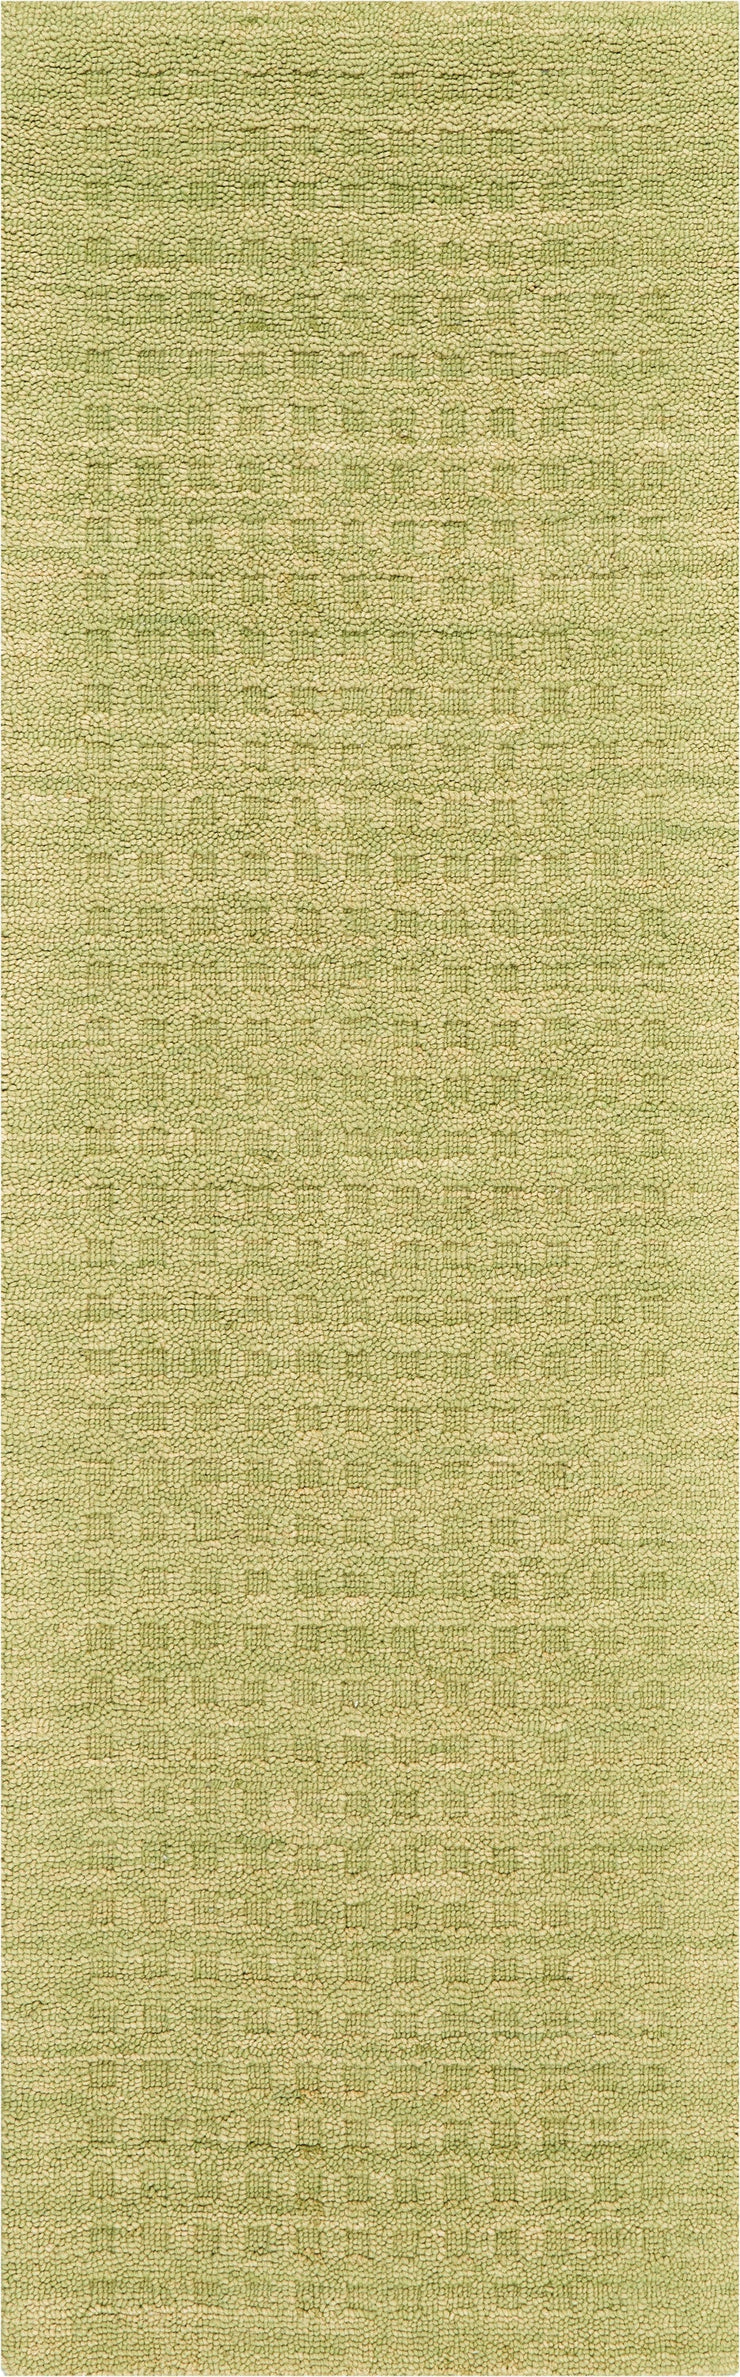 marana handmade green rug by nourison 99446400437 redo 2